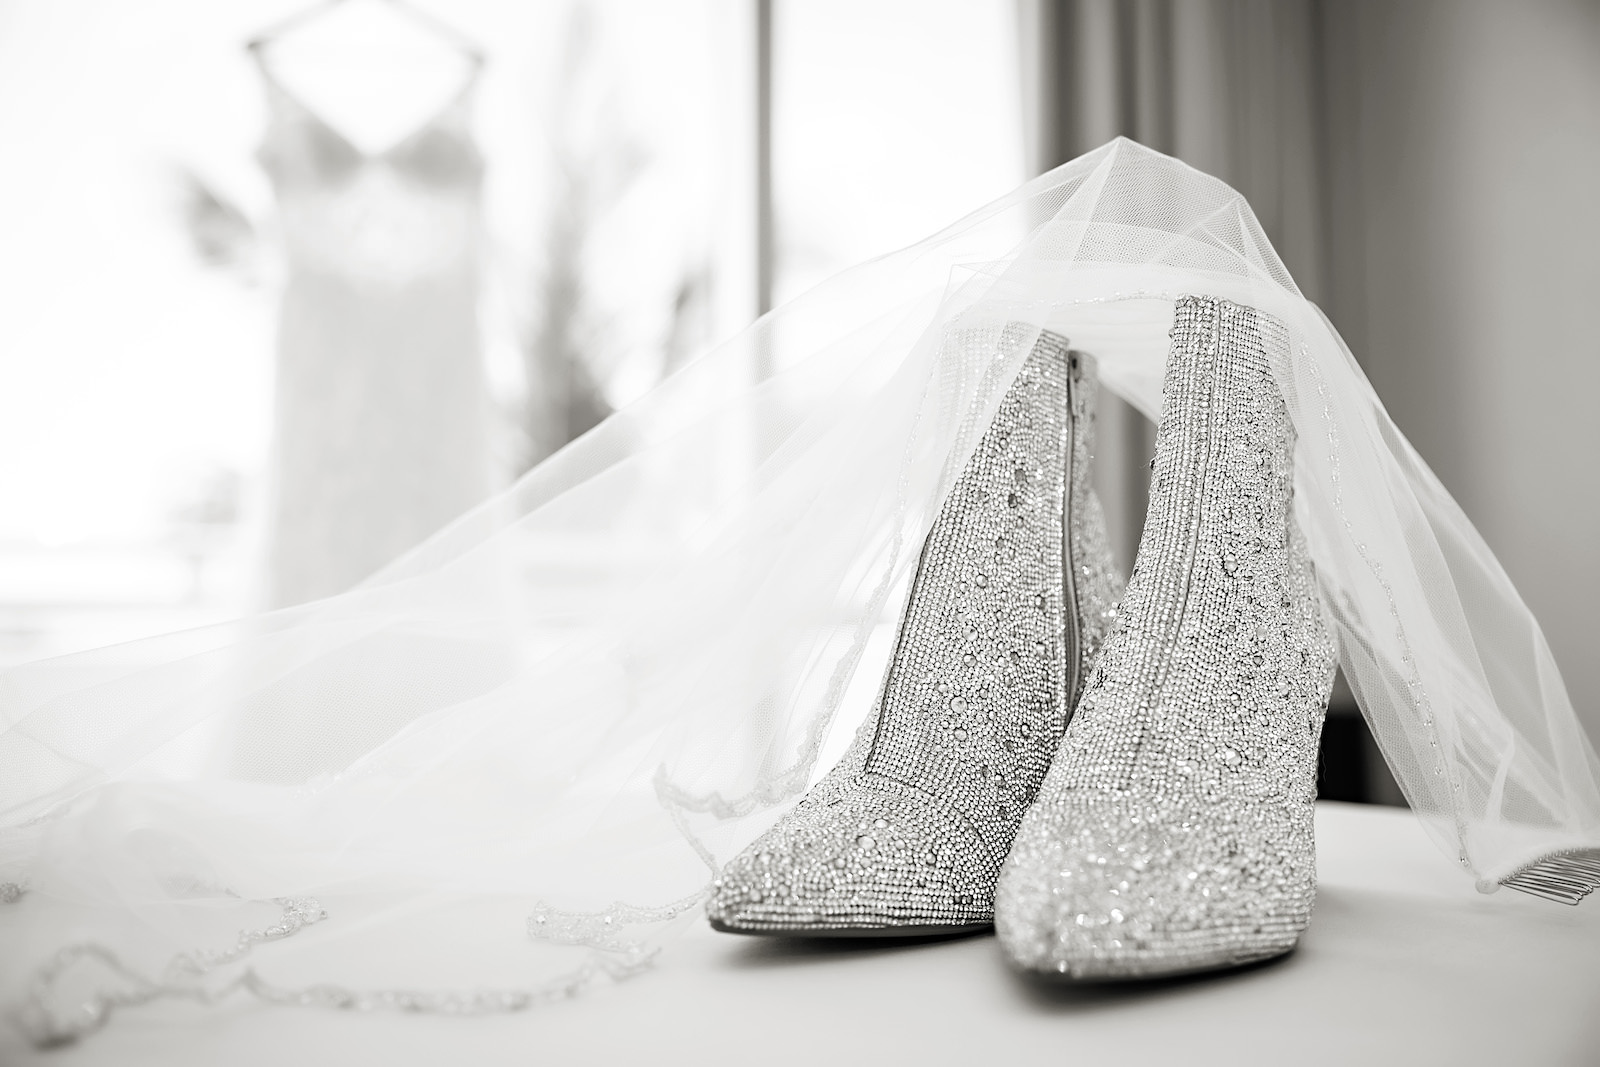 Rhinestone Betsy Johnson Wedding Booties with Veil | Florida Wedding Photographer Limelight Photography